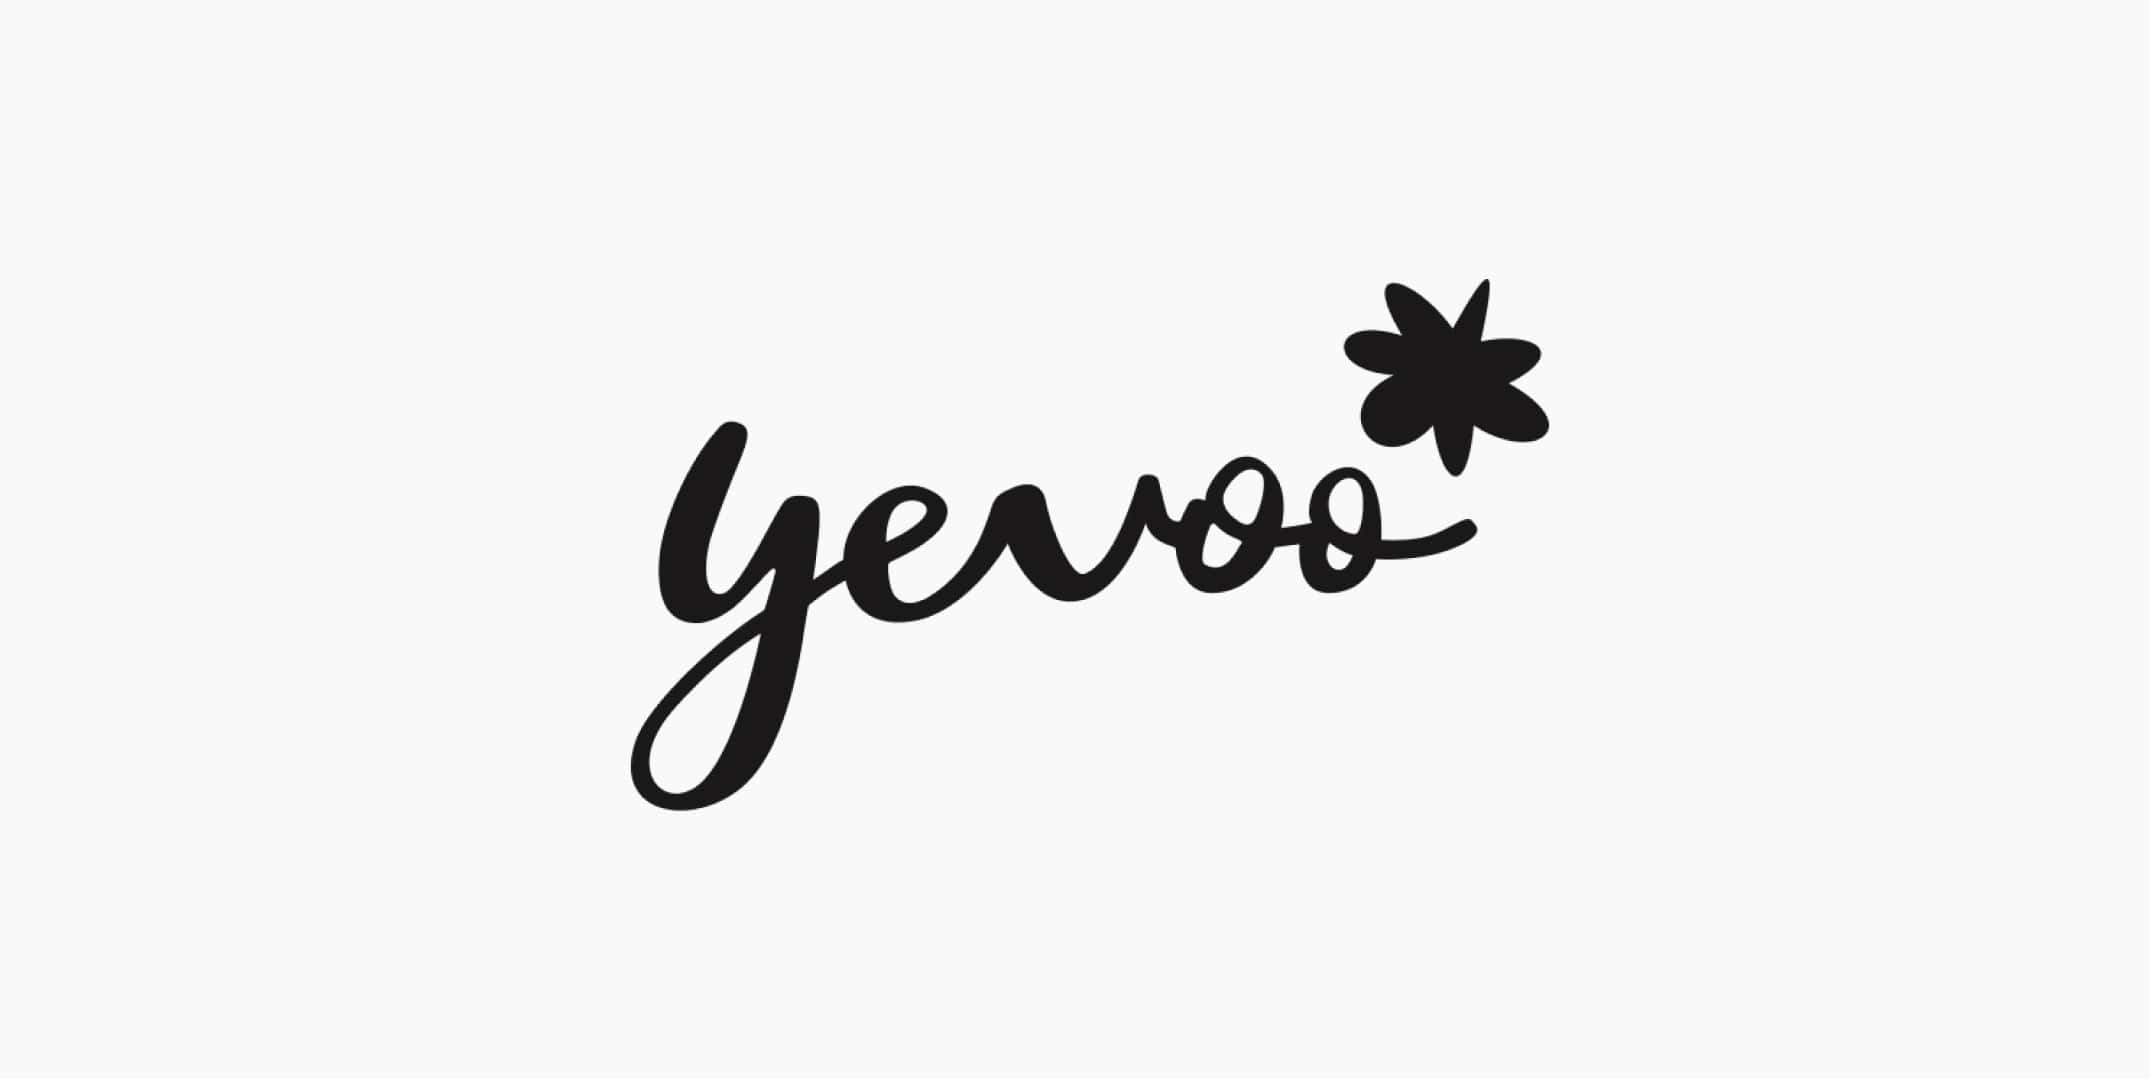 Yevoo Logotype Min